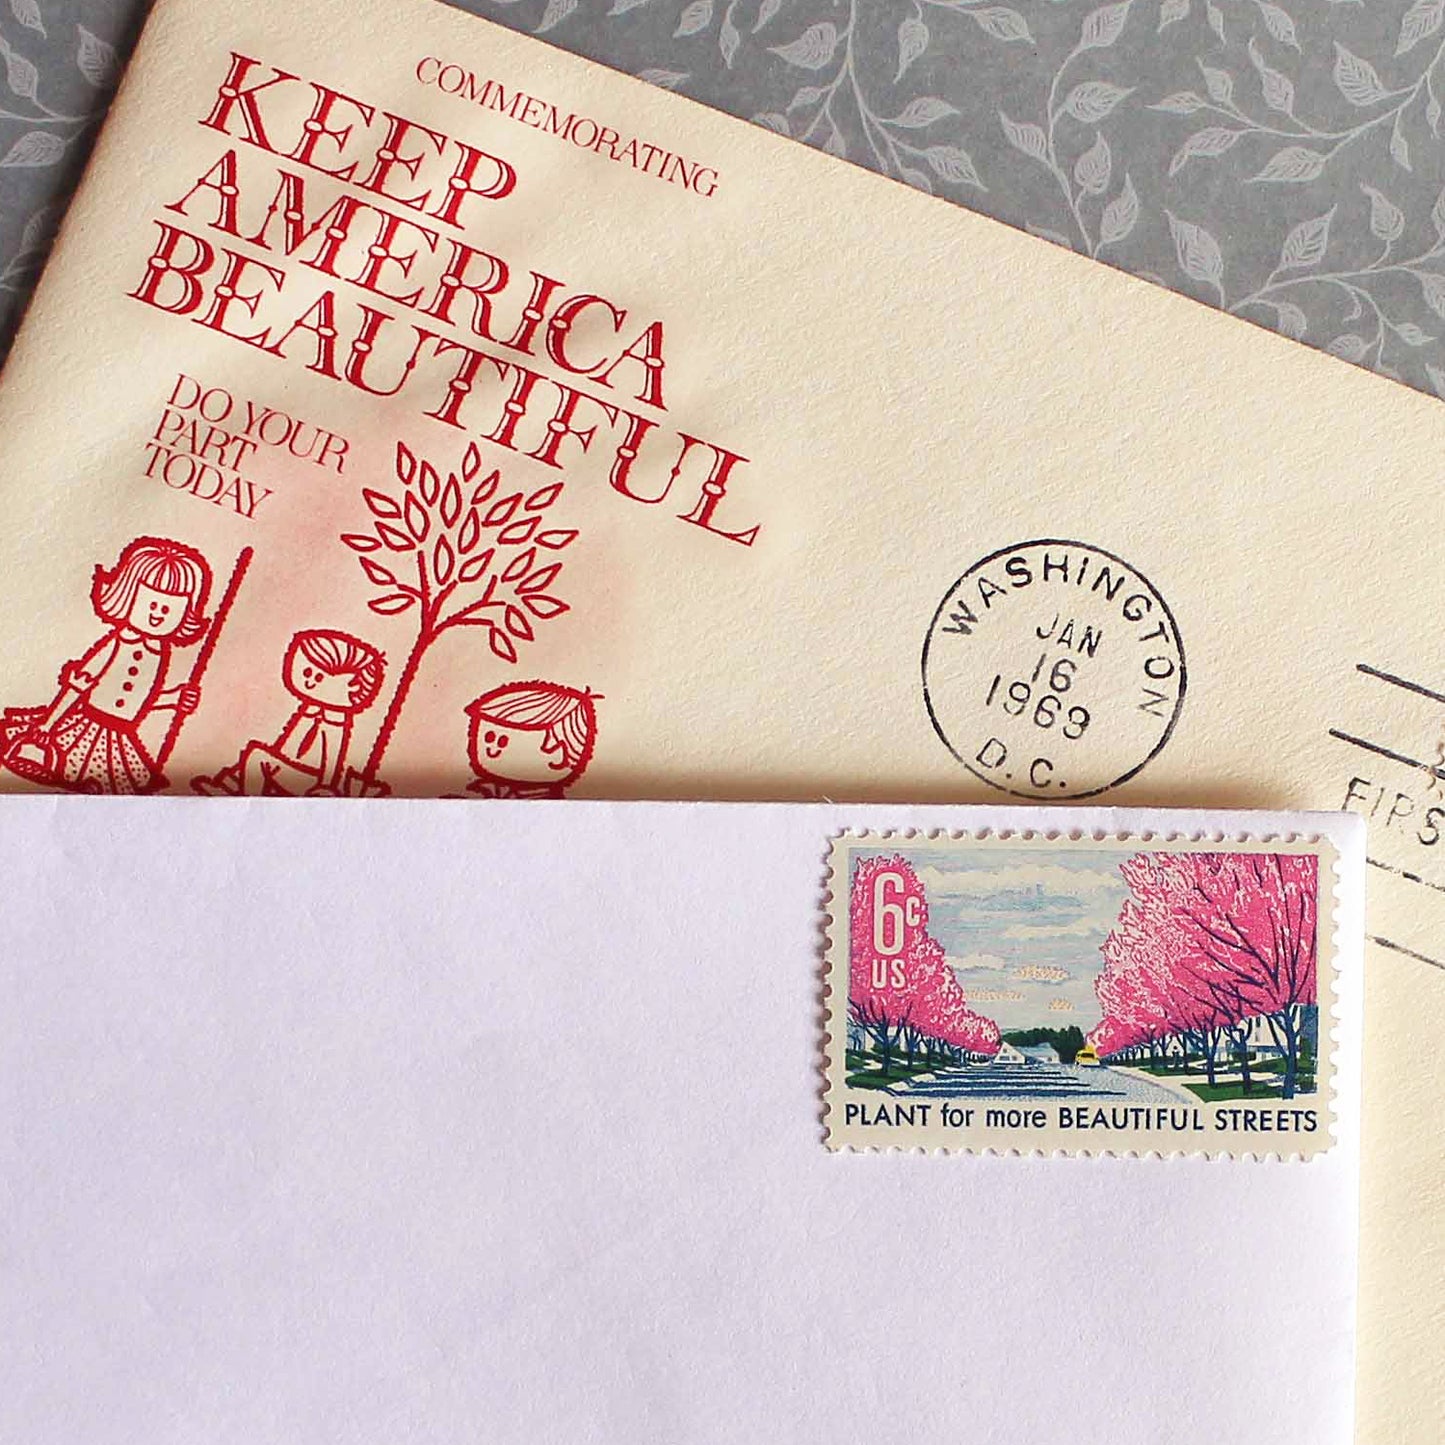 6c Beautification Stamps .. Vintage Unused US Postage Stamps .. Pack of 20